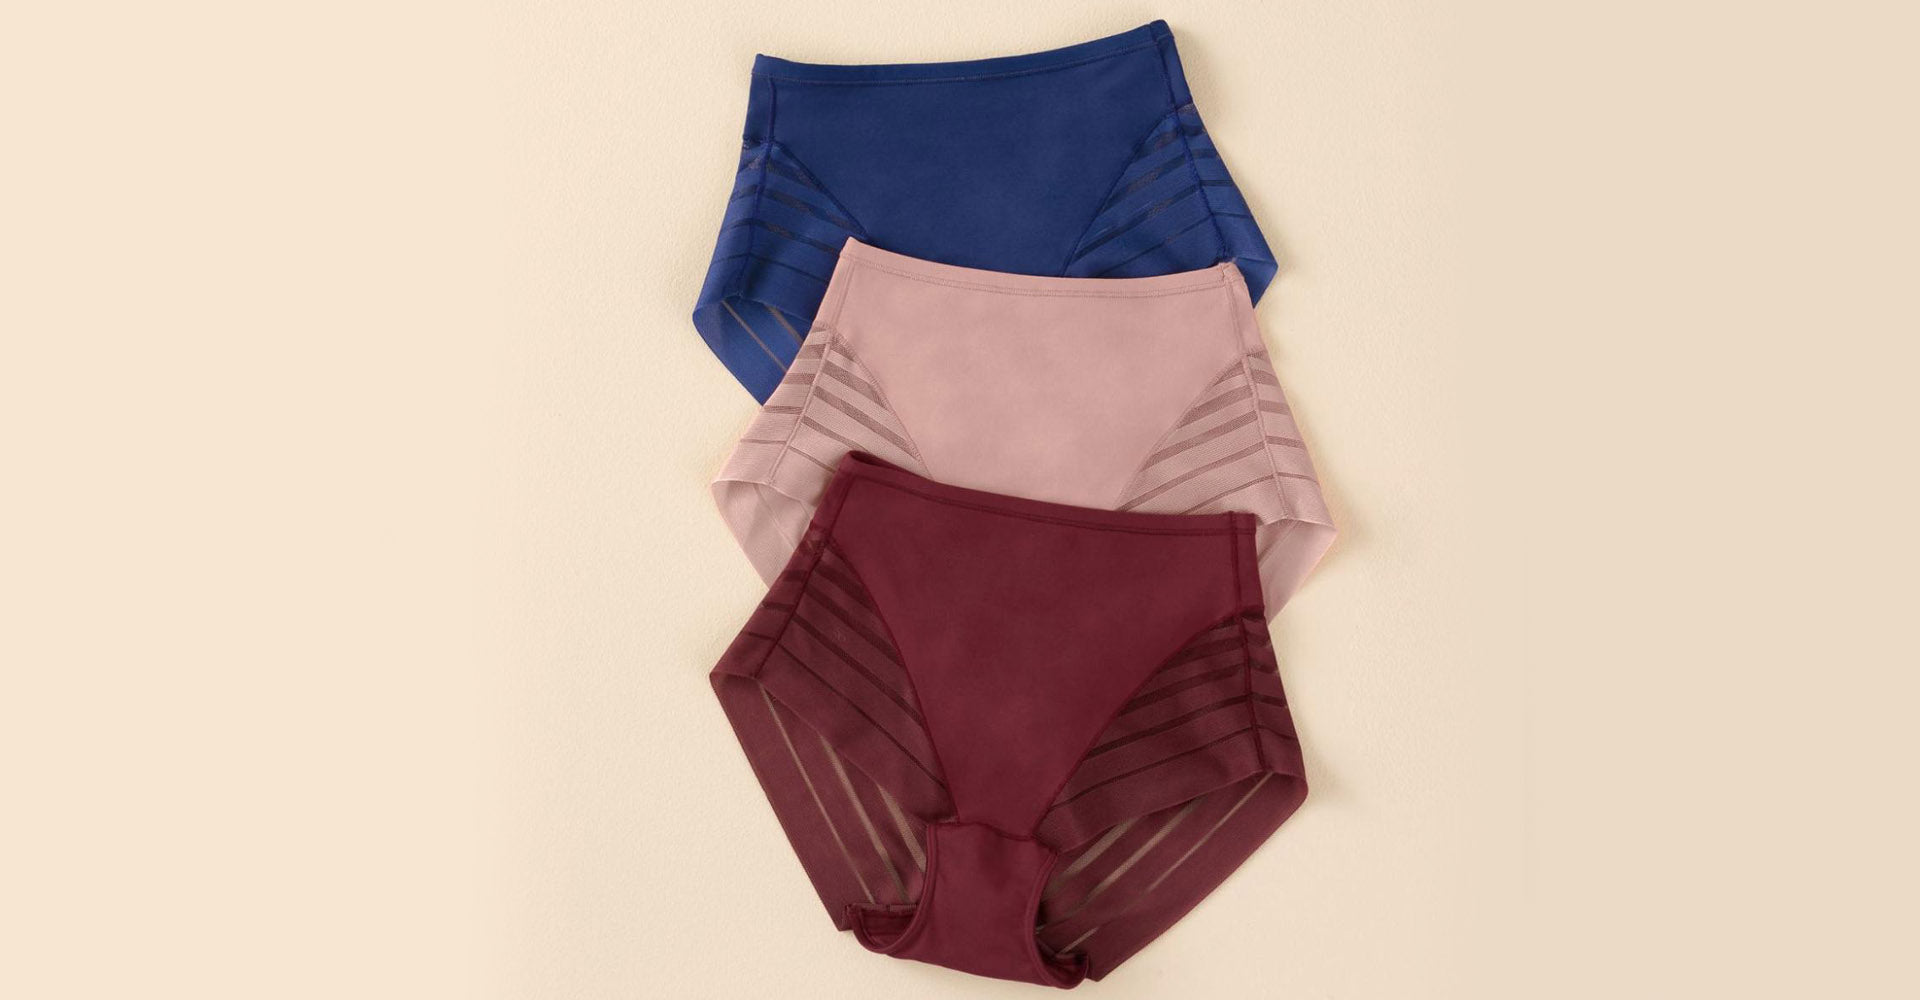 Underwear with flattering design - Leonisa